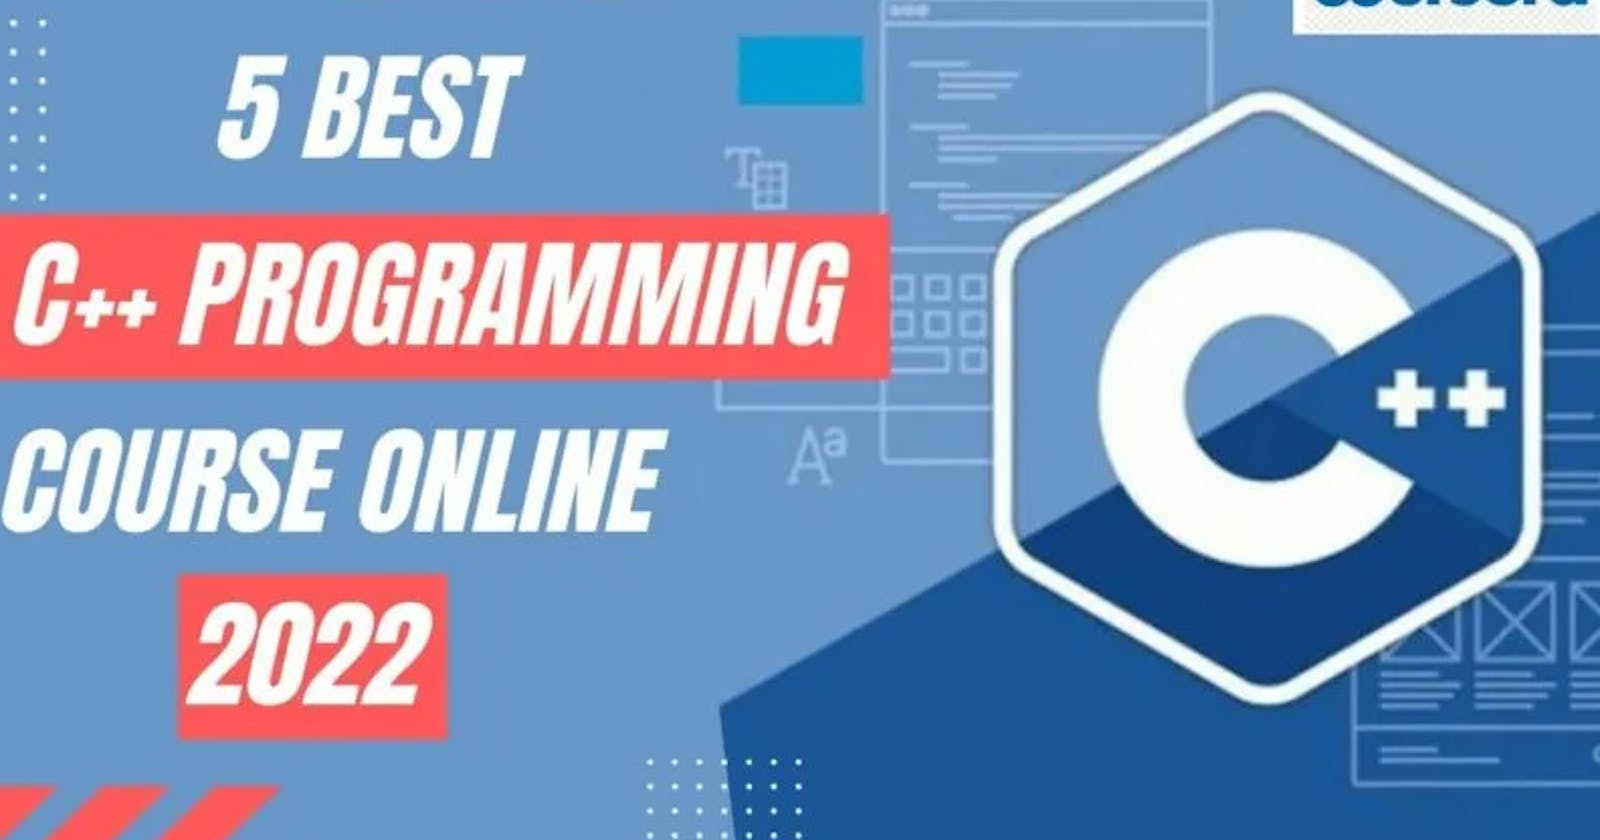 5 Best C++ Programming Courses